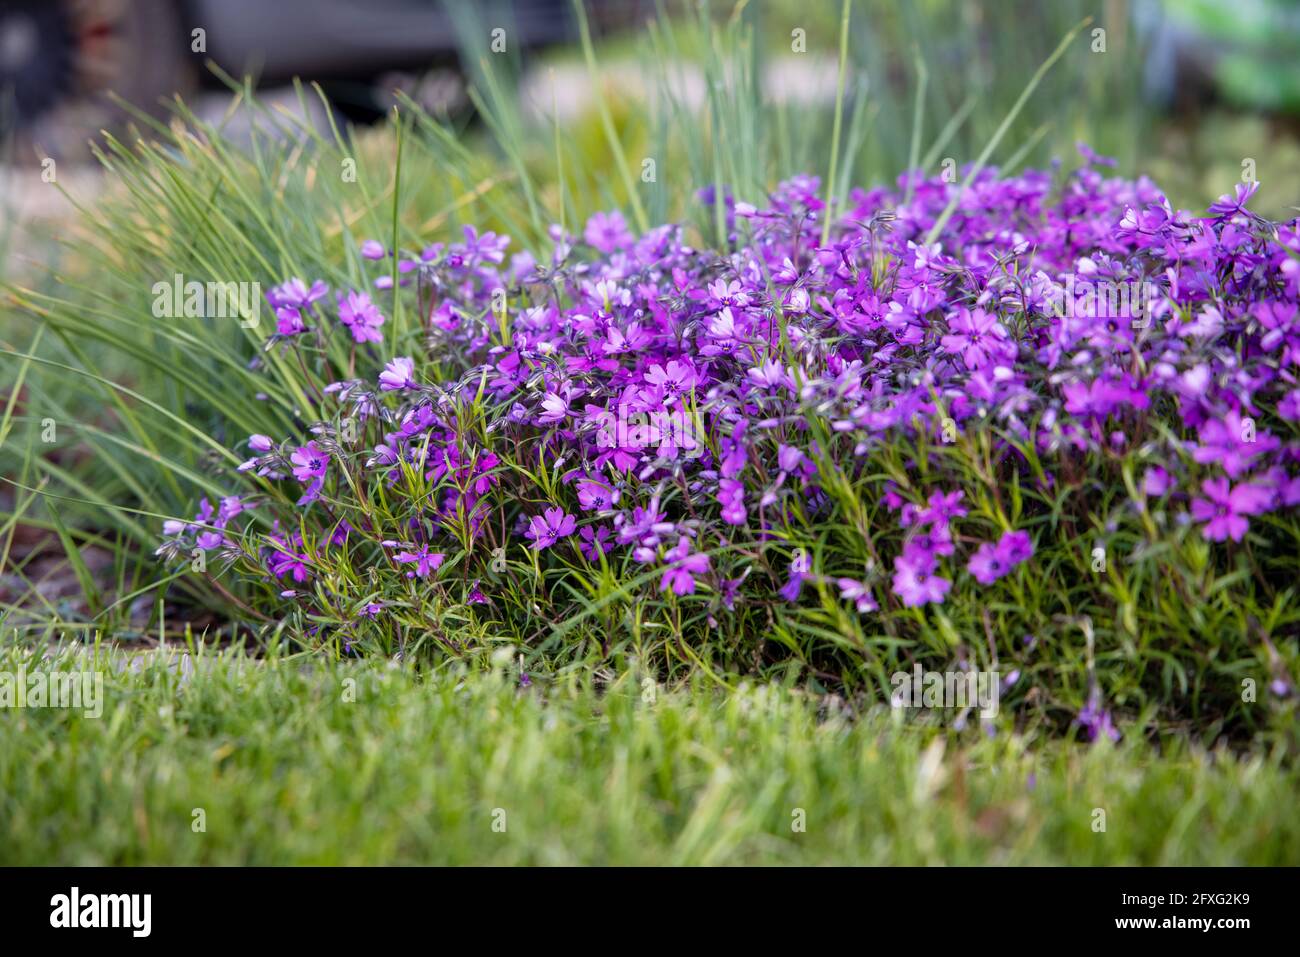 Flowers of Phlox subulata 'Atropurpurea' (Creeping phlox) in the garden in early June. Bright purple carpet flowers on a sunny day. Stock Photo